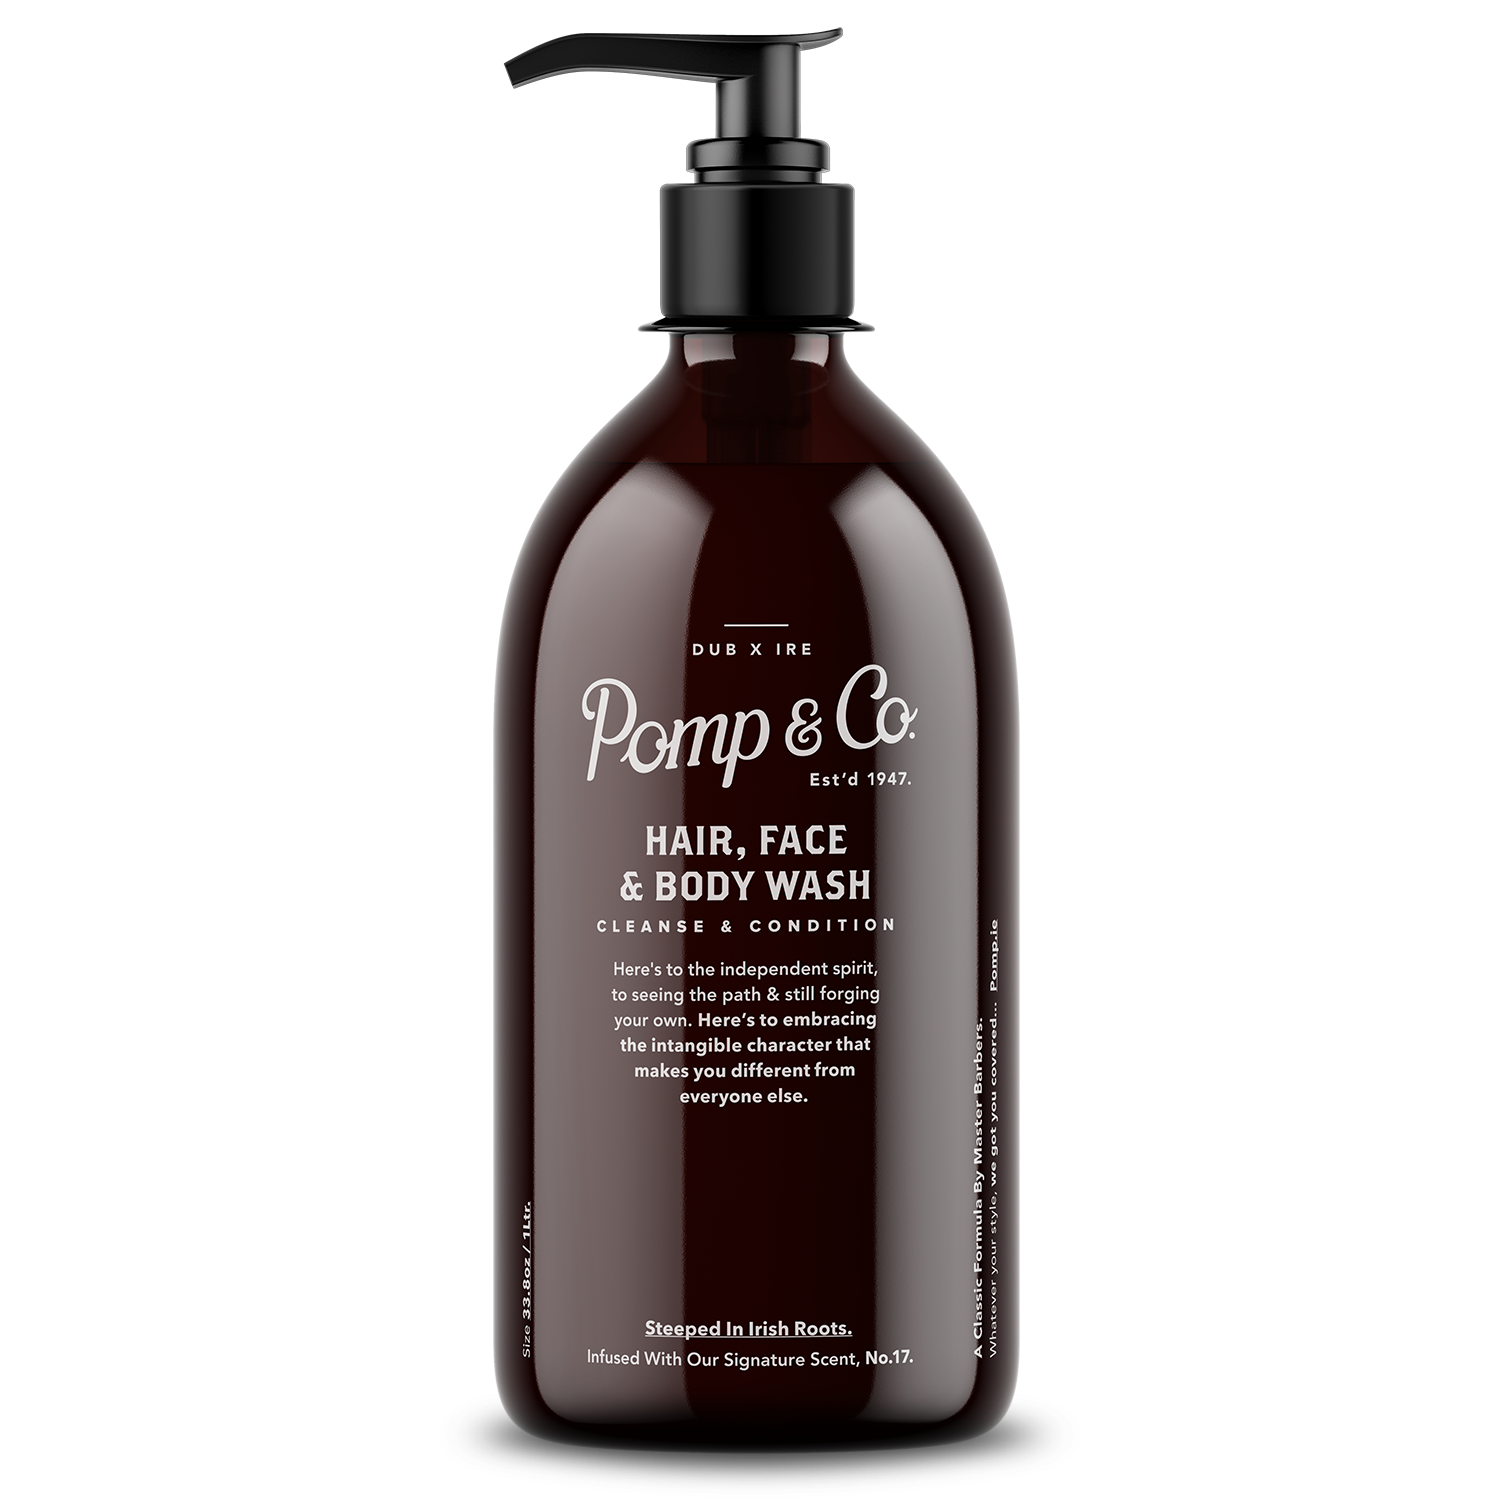 Pomp & Co's Hair, Face & Body Wash